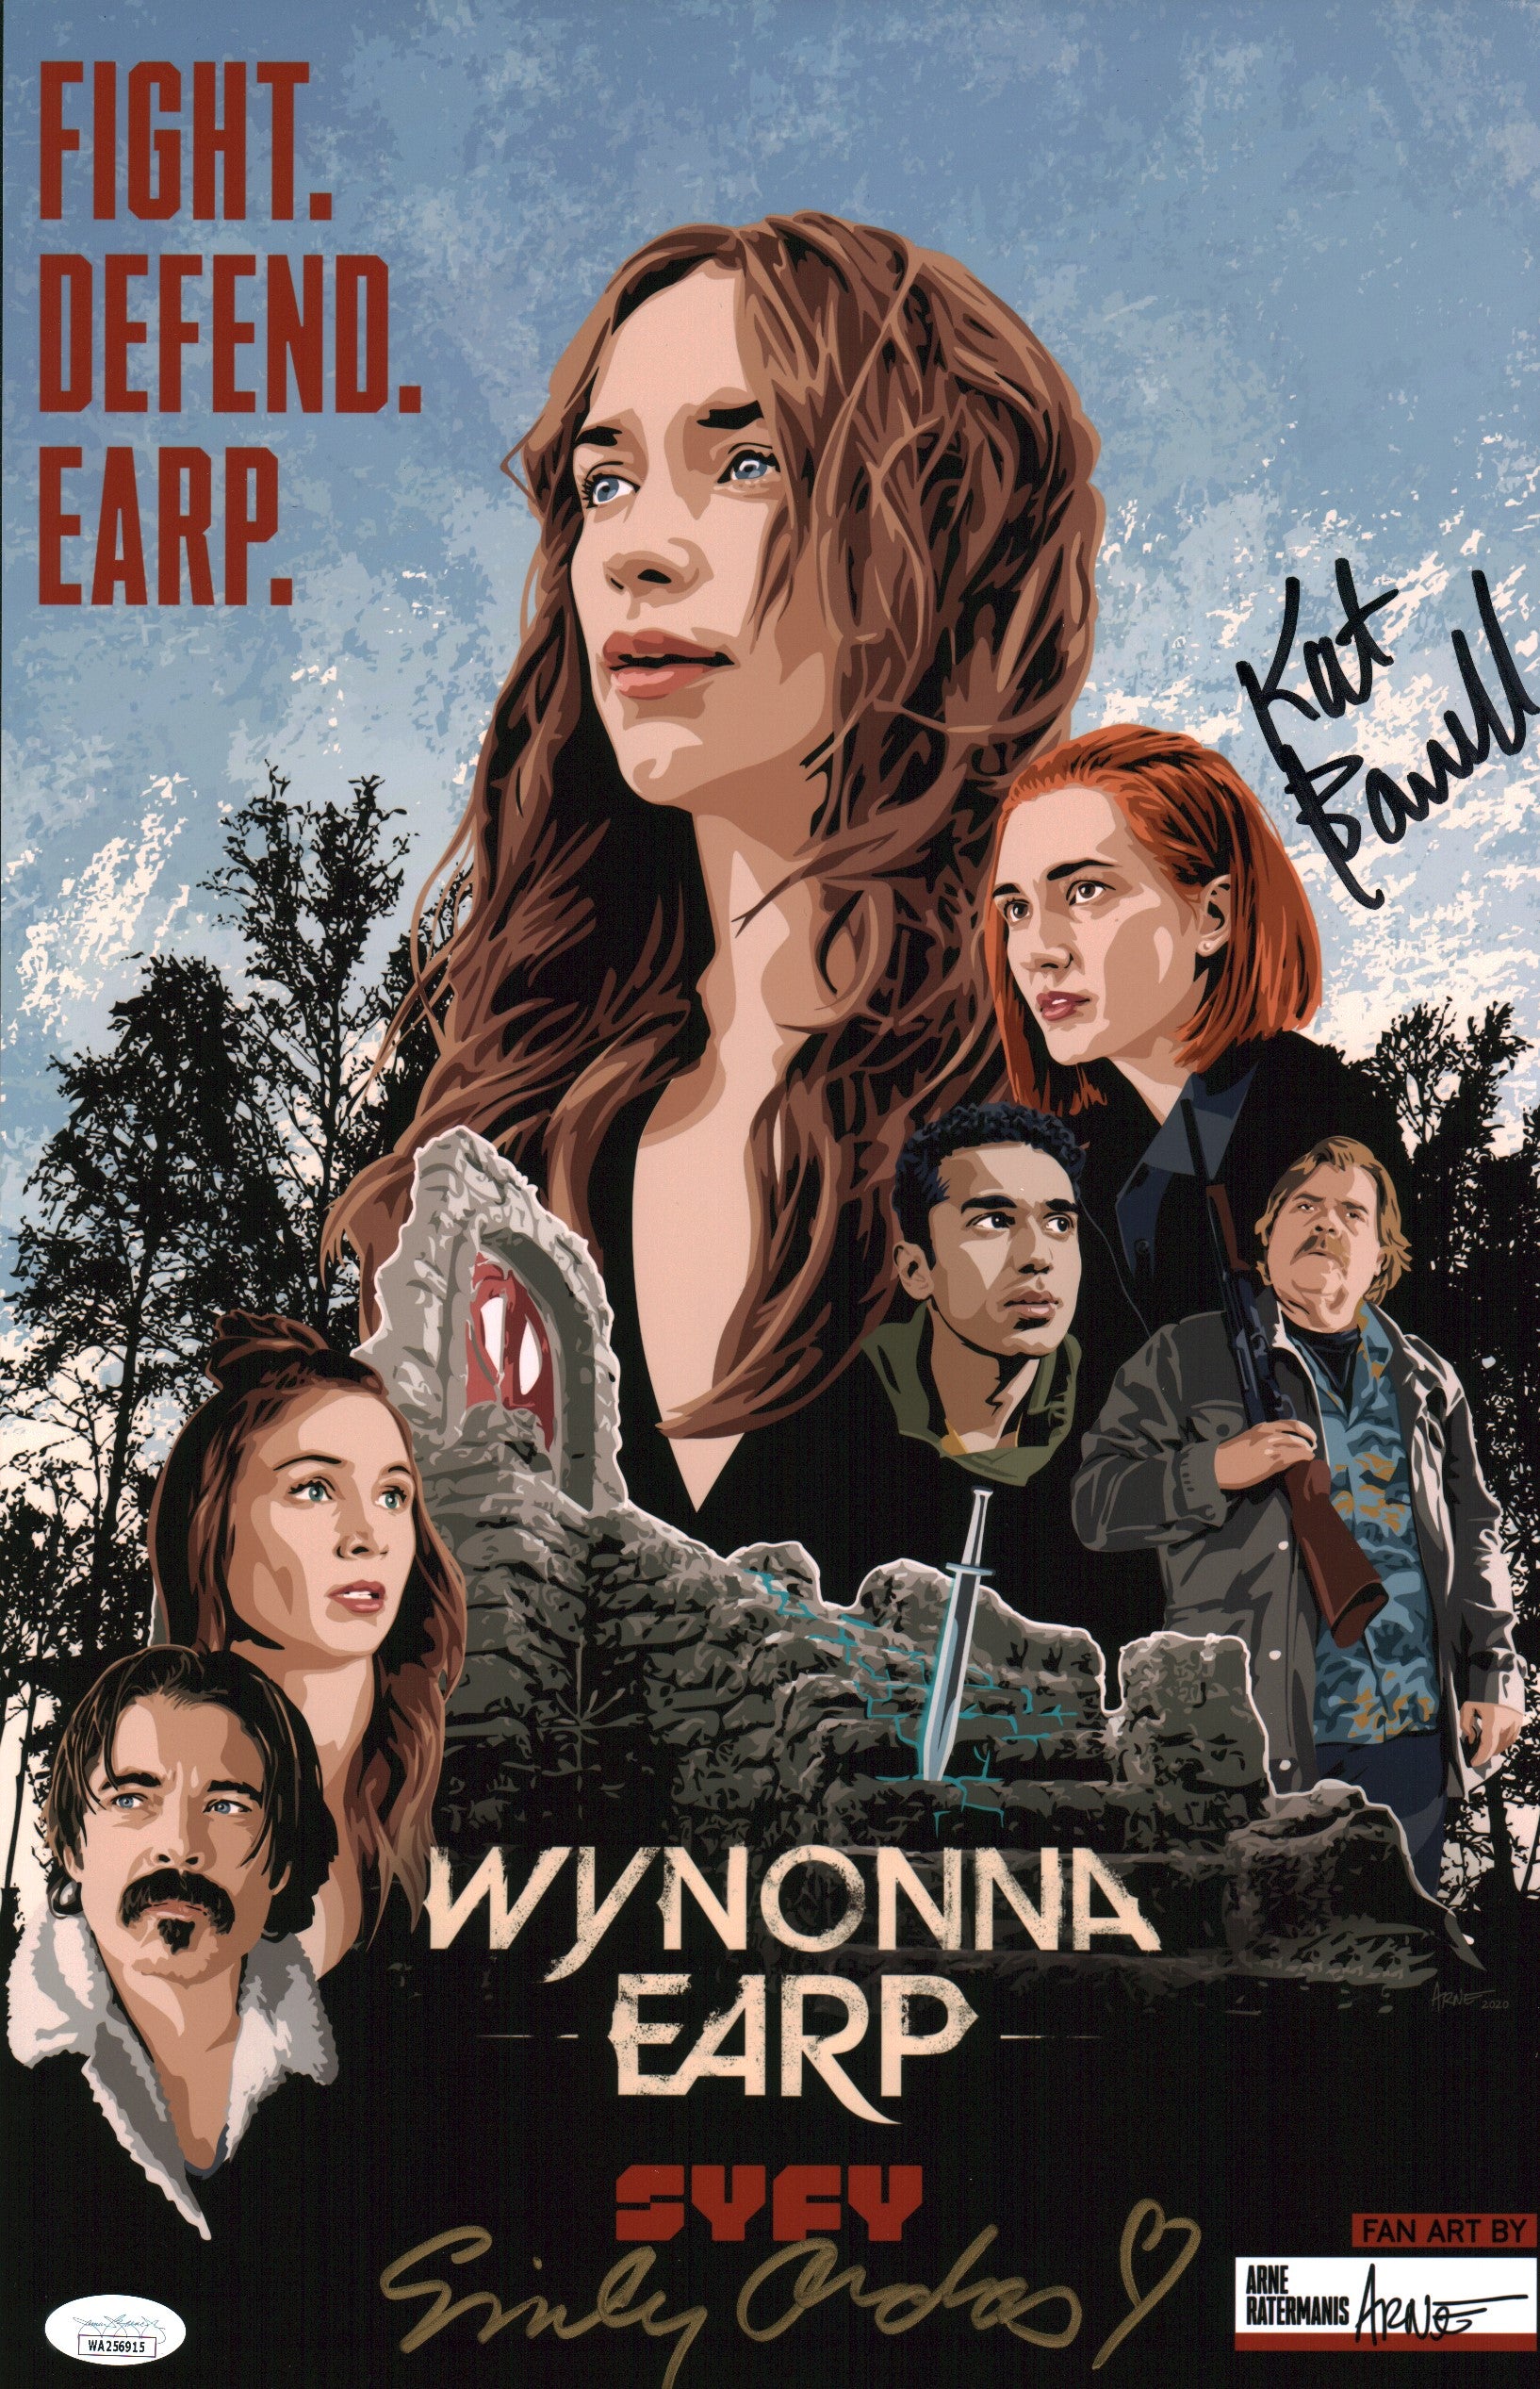 Wynonna Earp 11x17 Cast Photo Poster Signed Andras Barrell JSA Autograph GalaxyCon